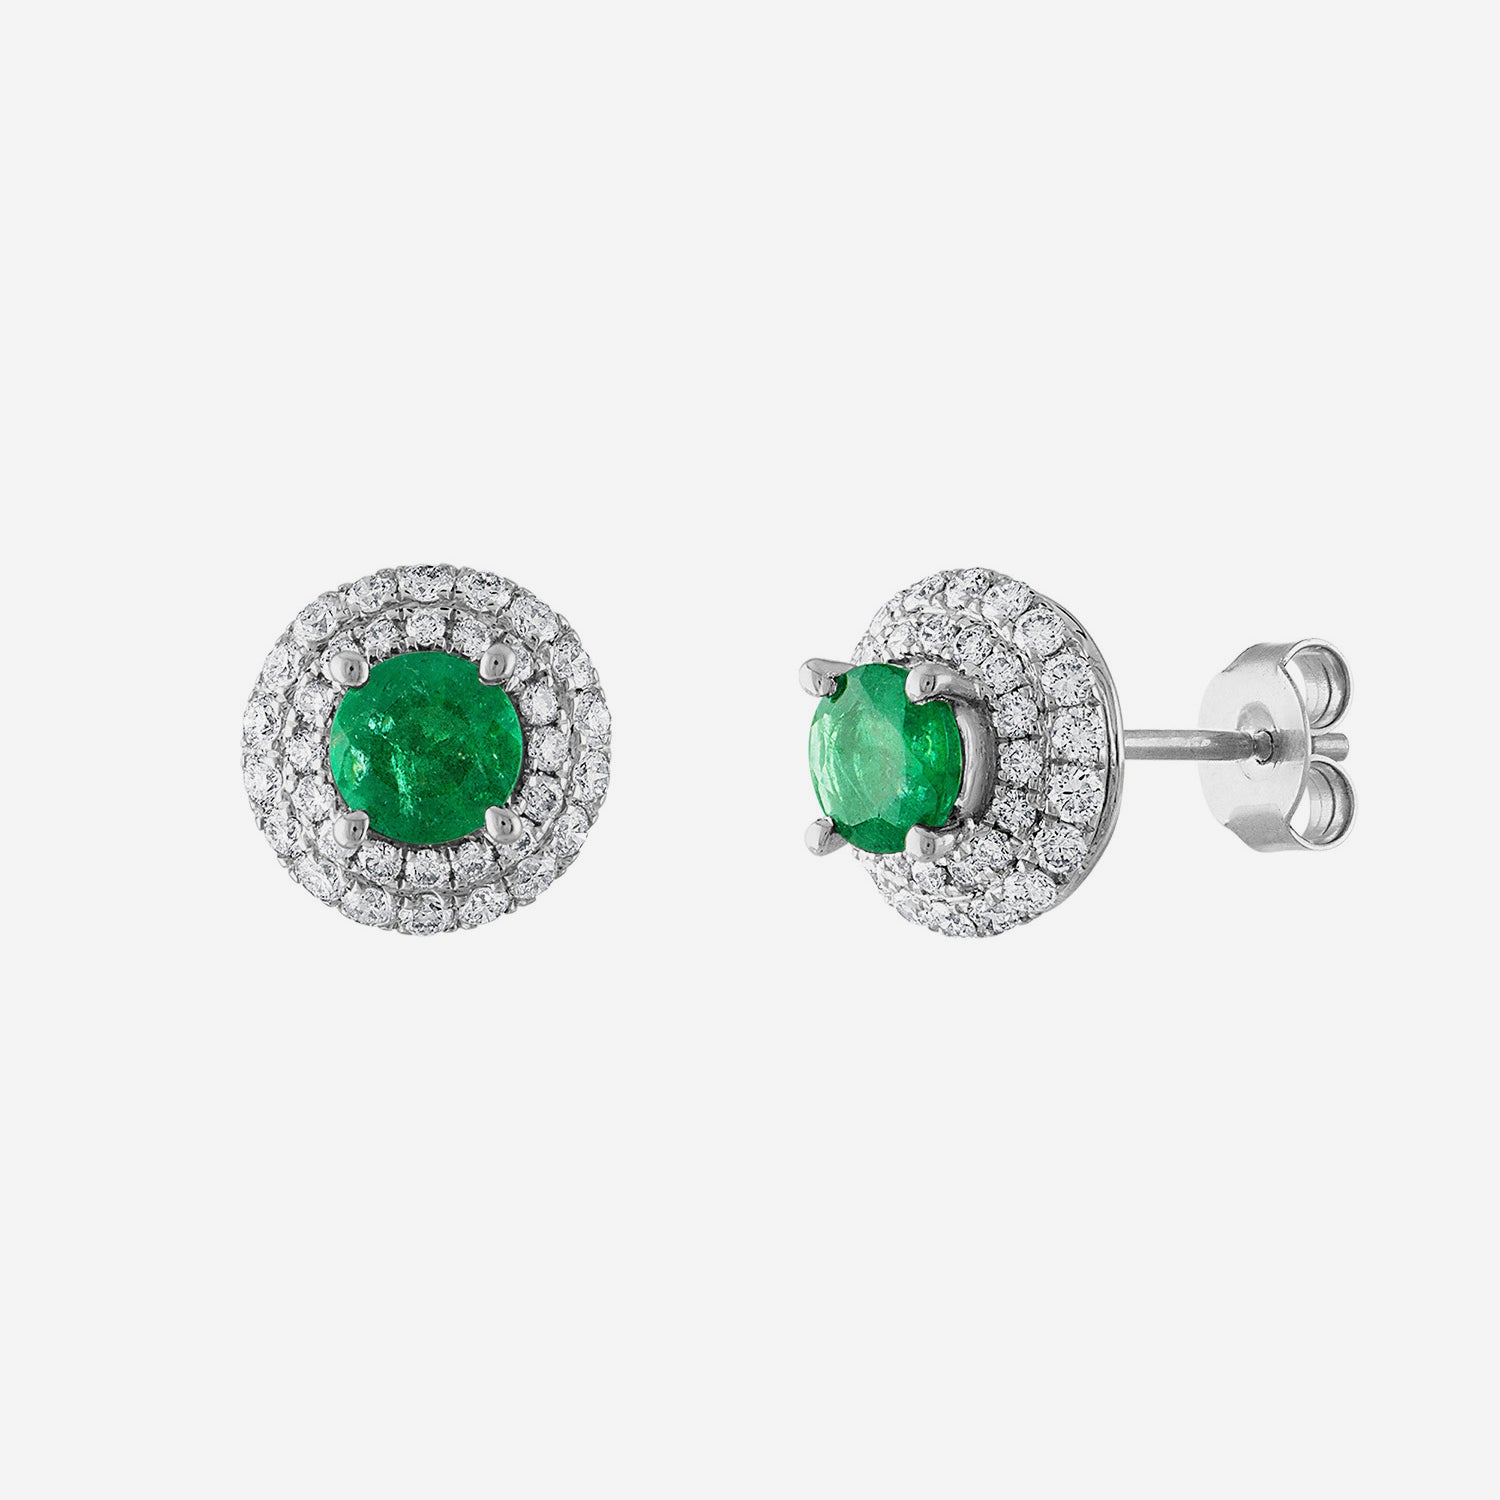 Tresorra 18K White Gold Diamond and Emerald Earrings 182-WG-EM - THE SOLIST